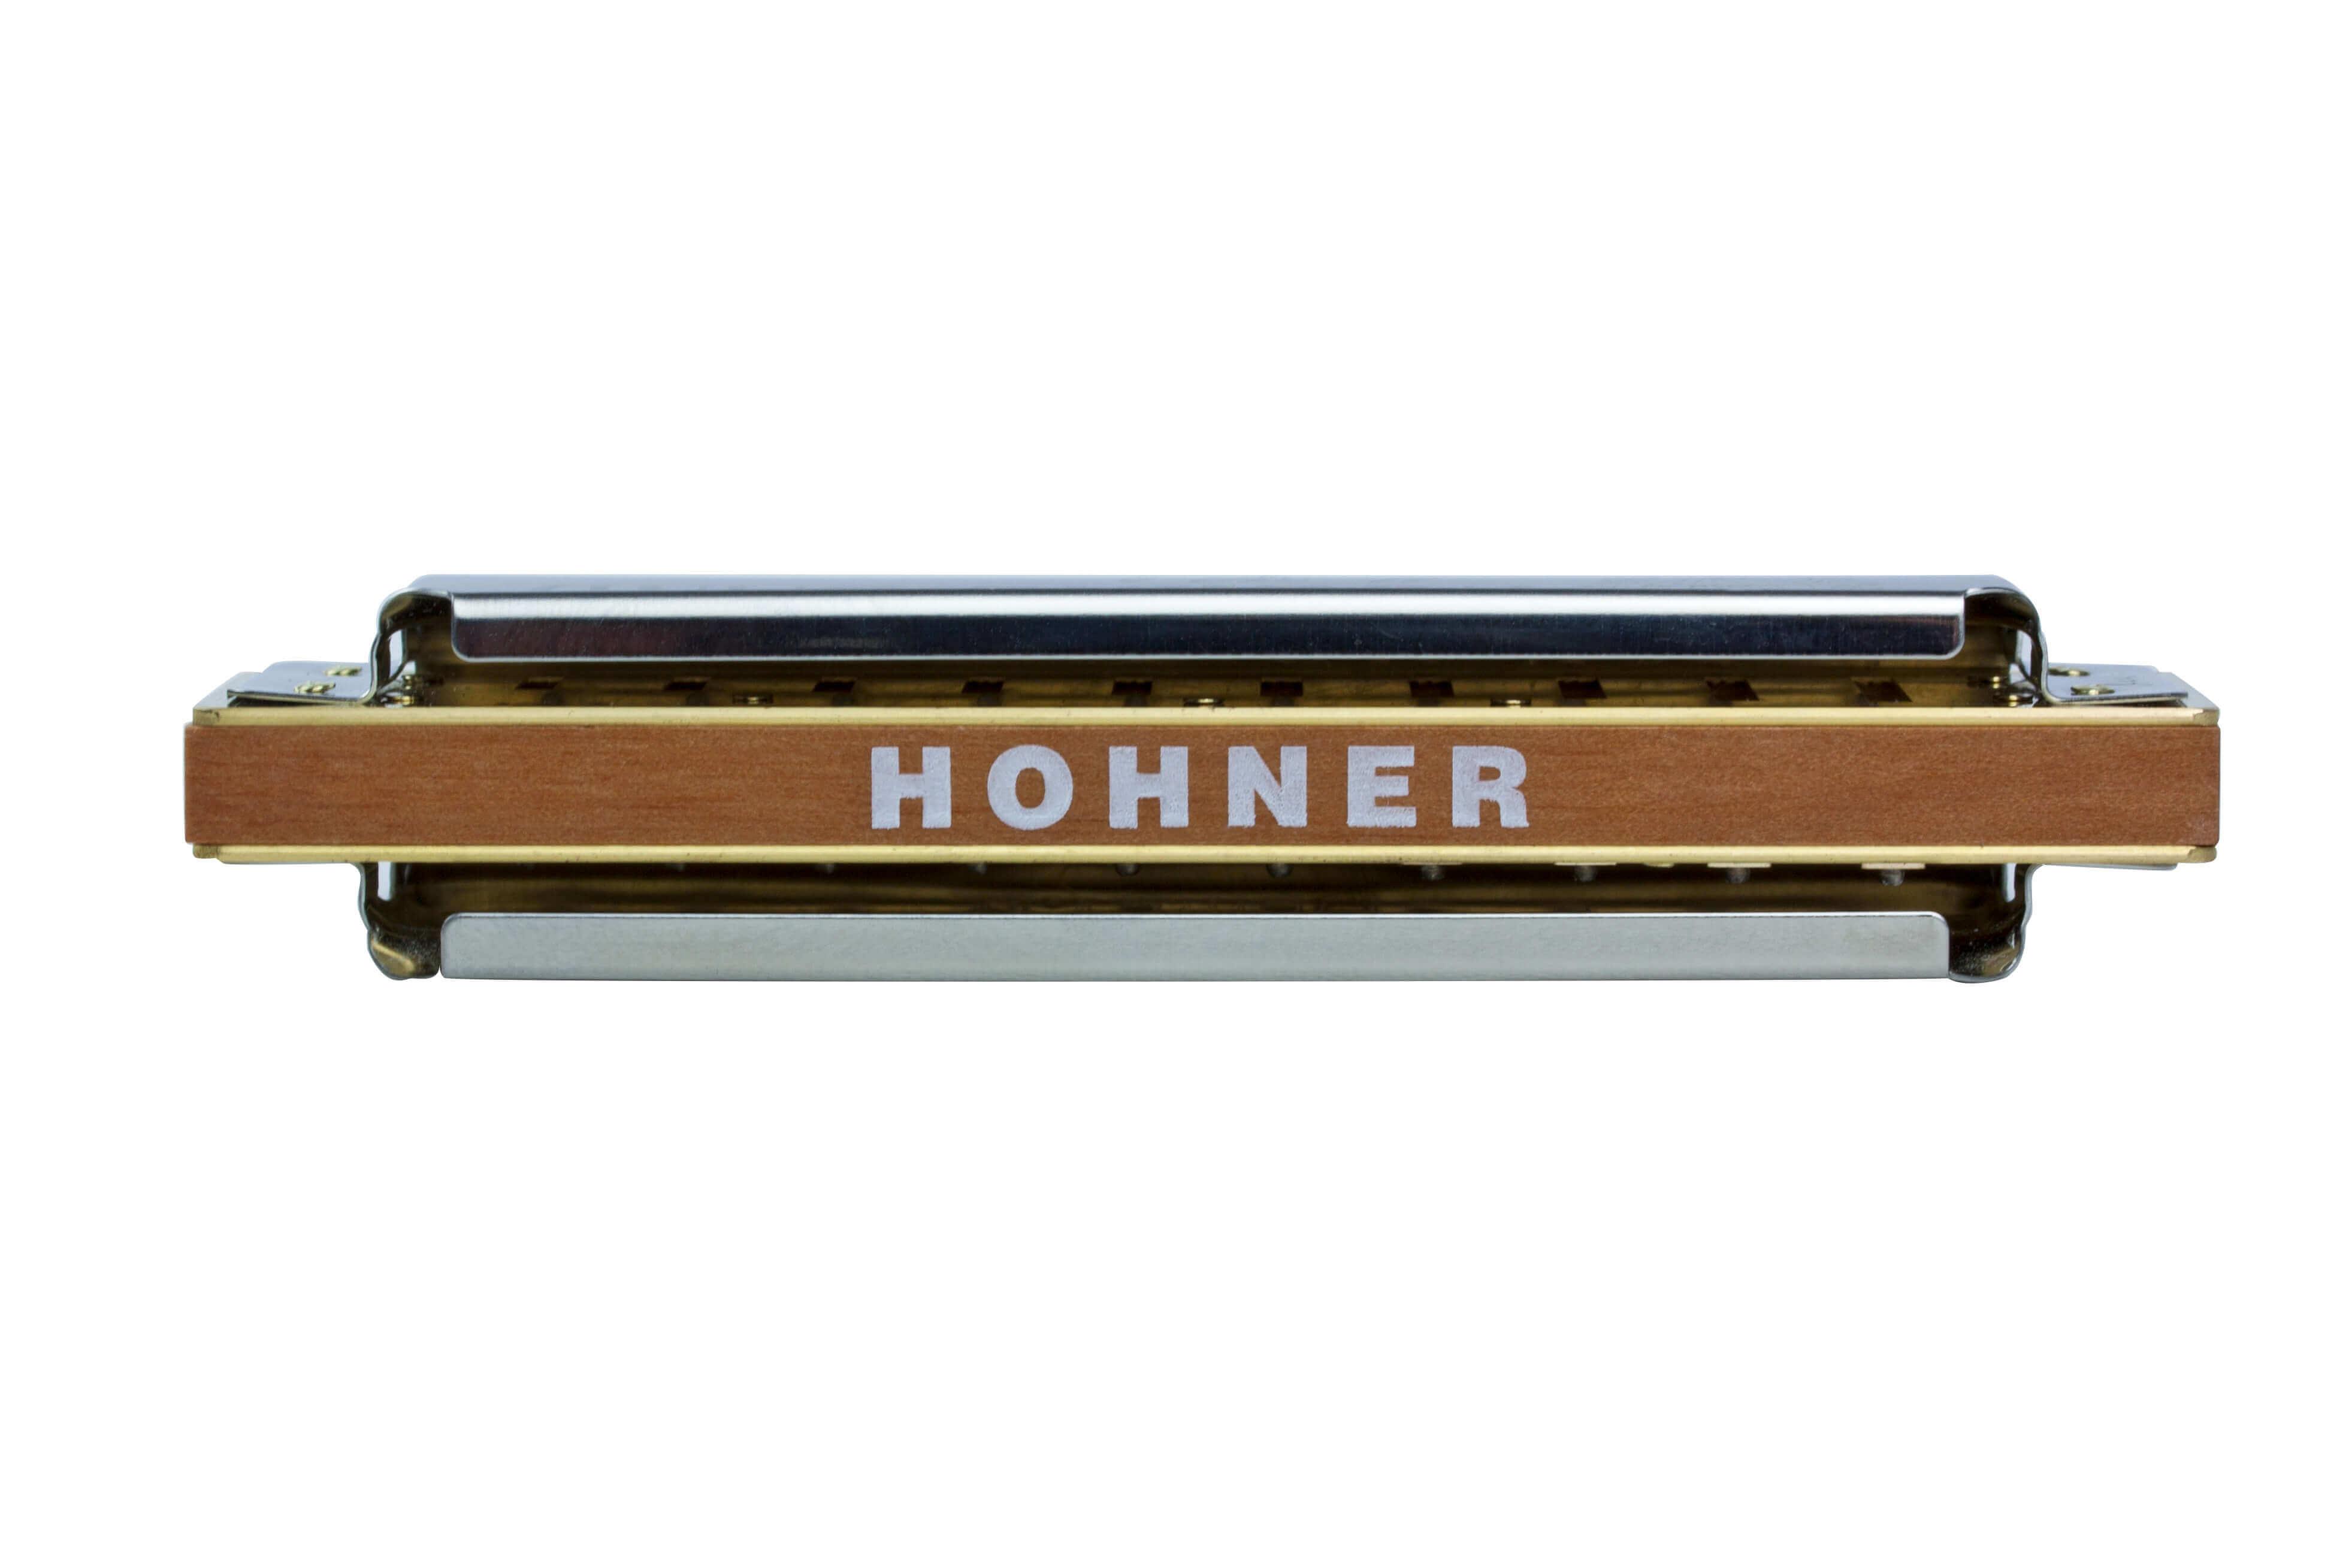 Hohner Marine Band C Harmonica - Harmonicas by Hohner at Muso's Stuff